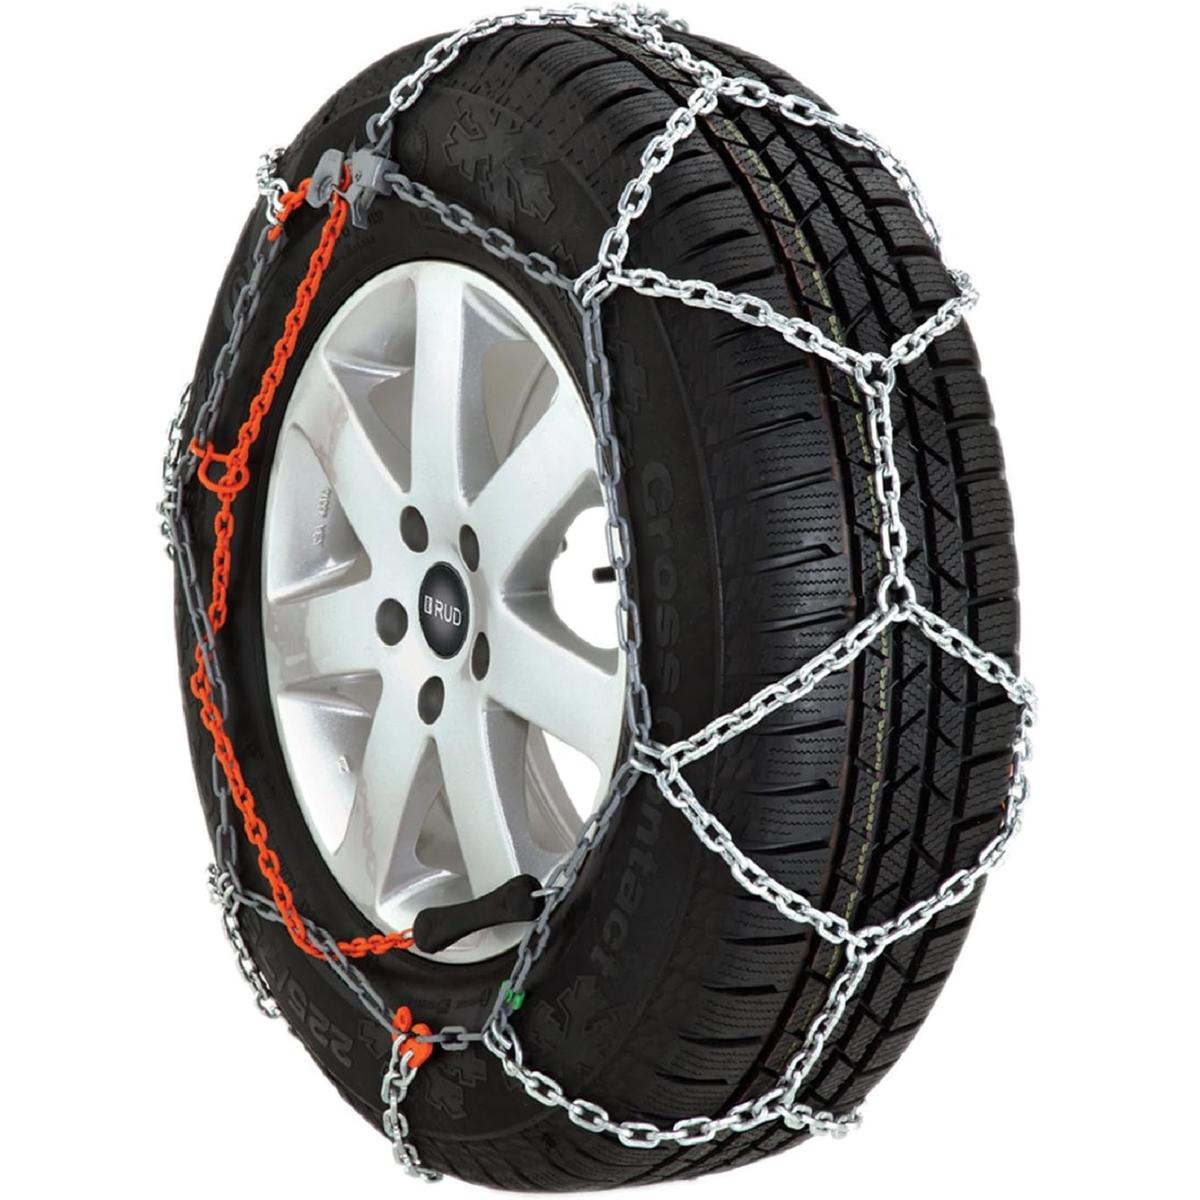 Grip 175/65R14 Passenger Vehicle Tire Chains